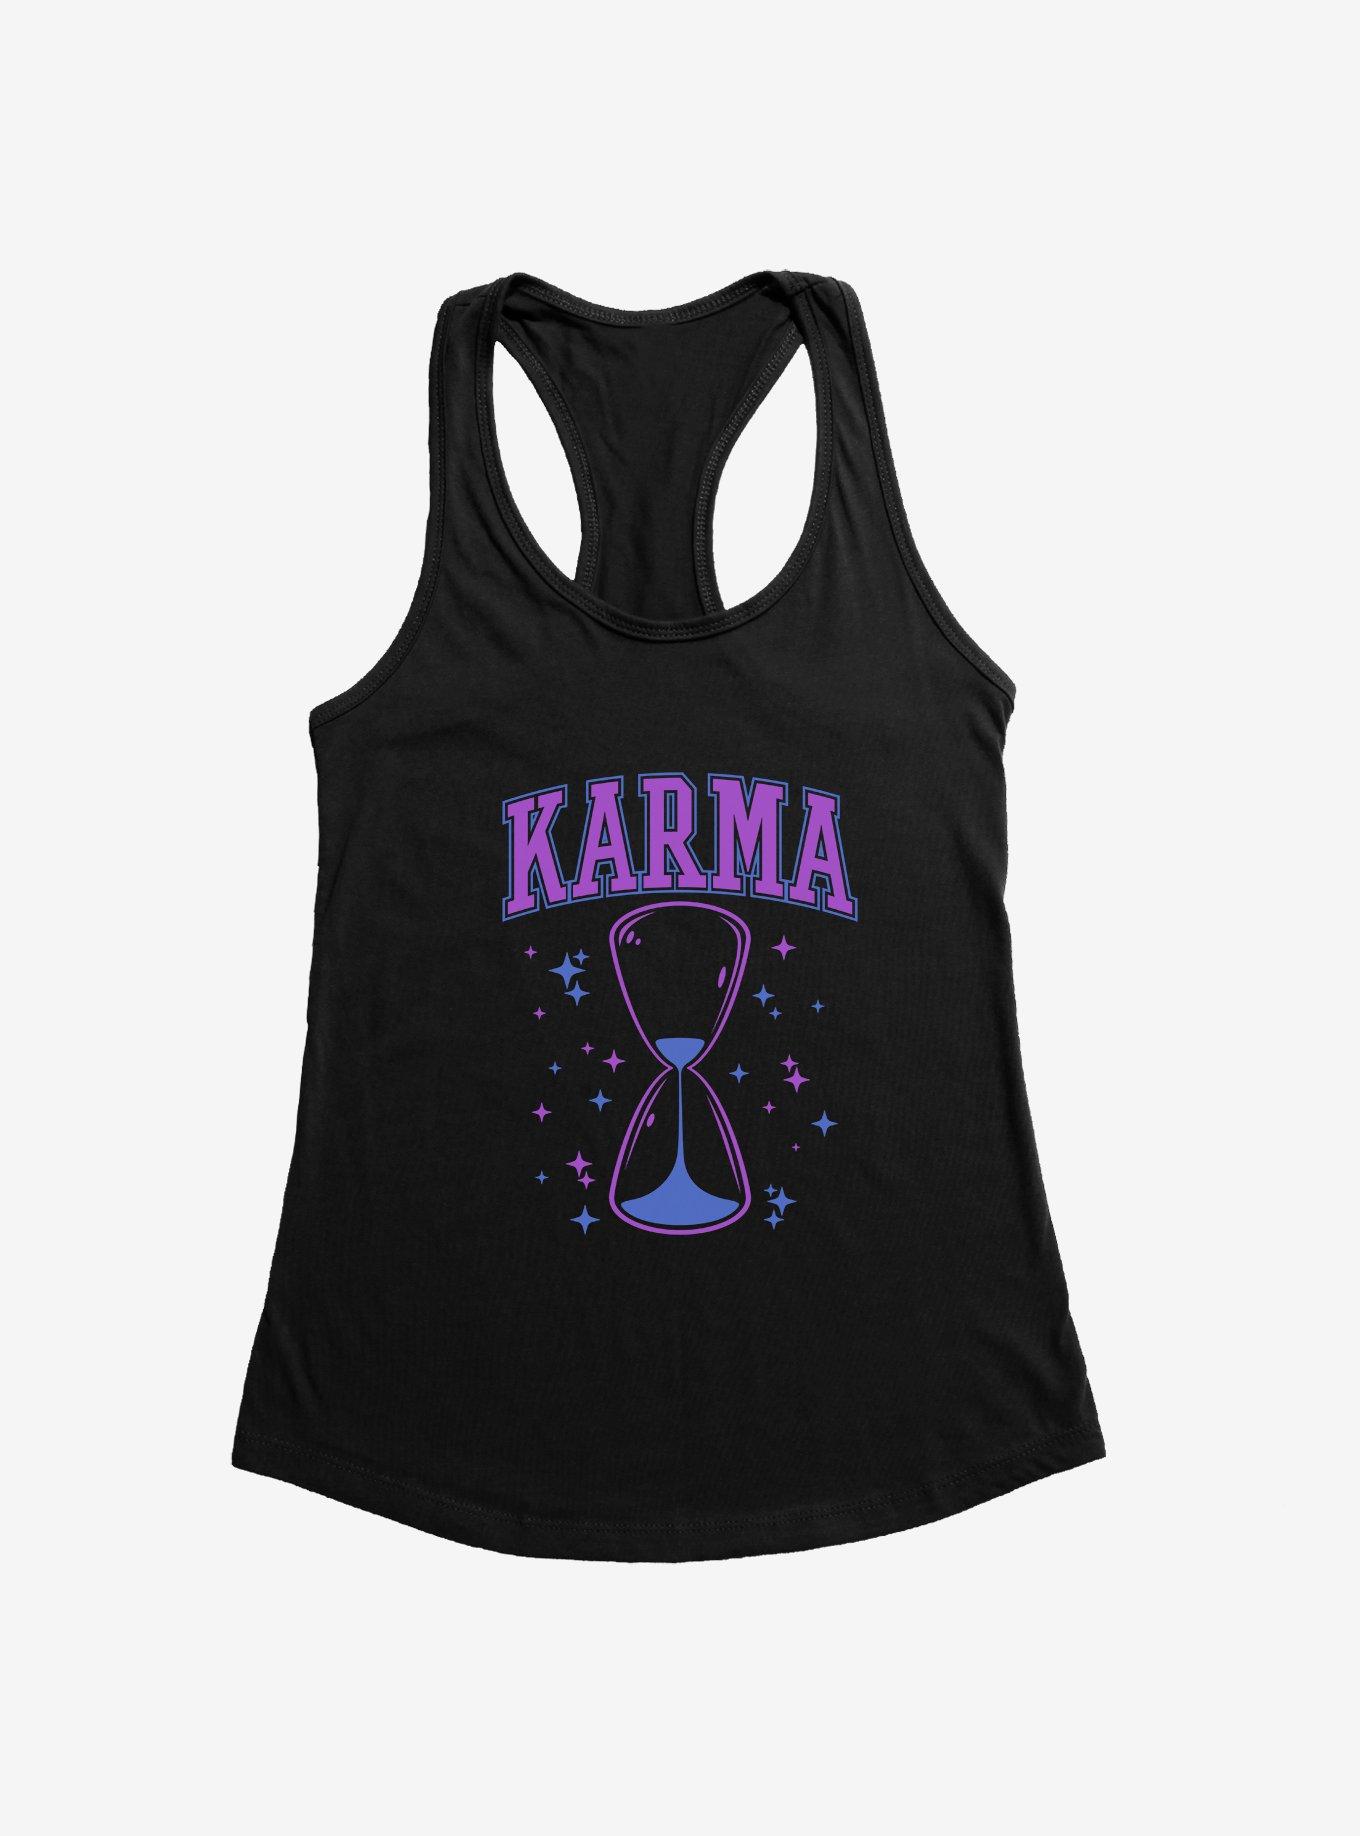 Karma Hourglass Girls Tank